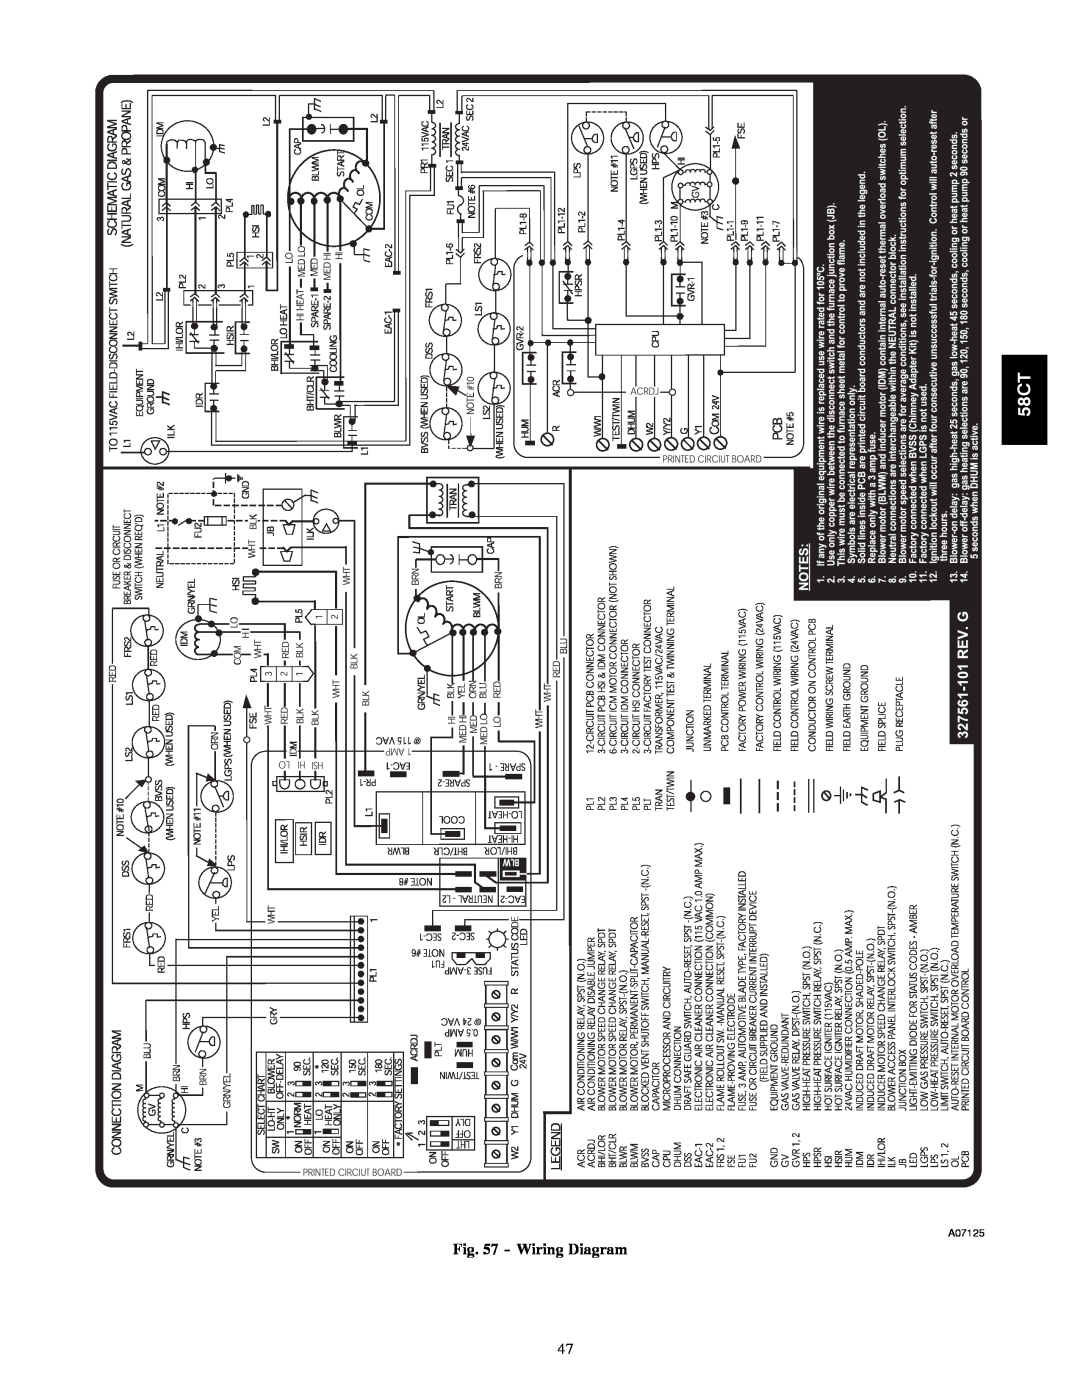 Carrier 58CTA/CTX instruction manual Wiring Diagram, A07125 